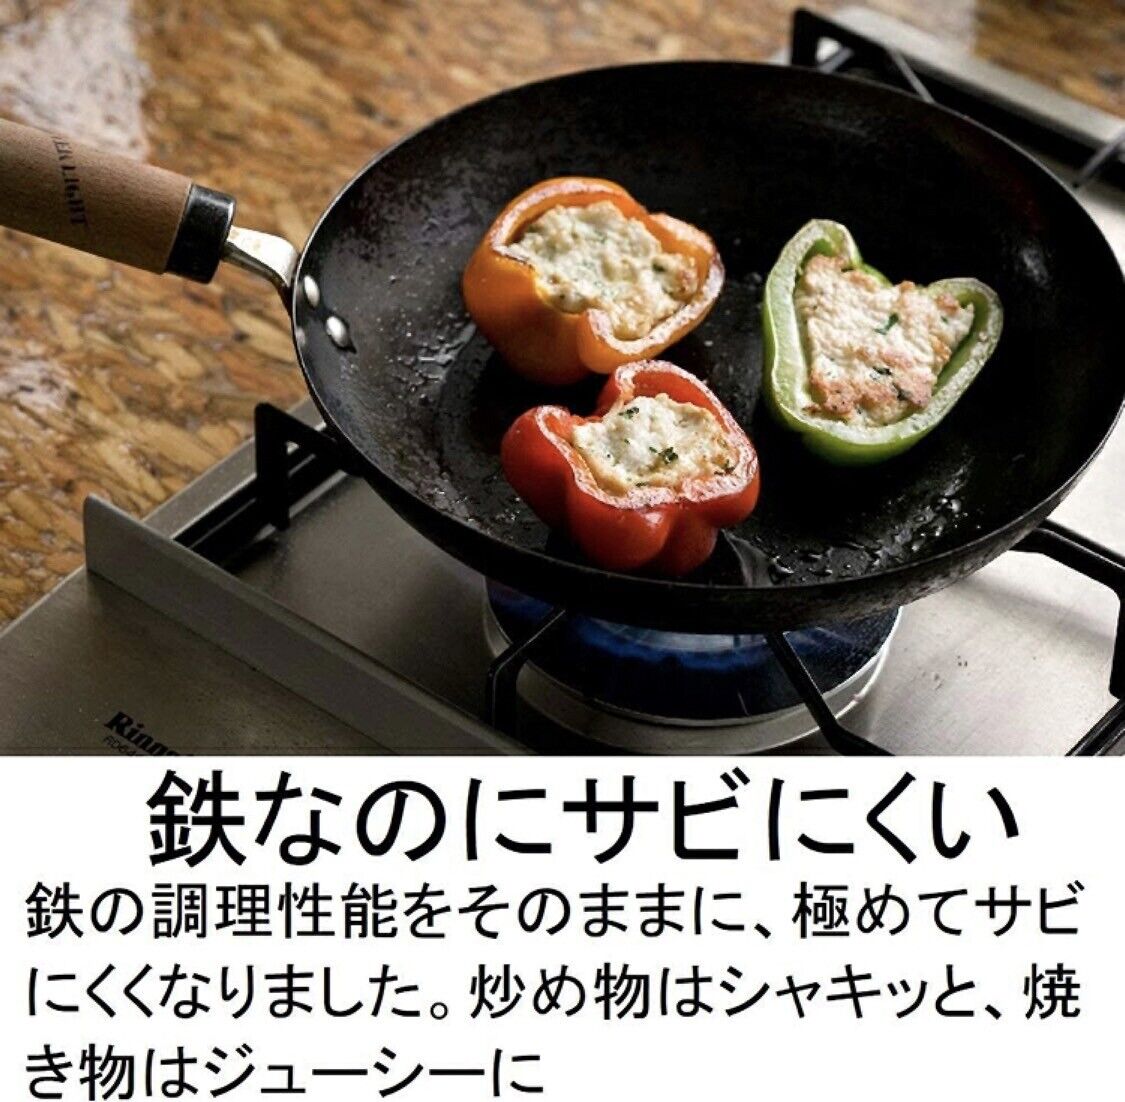 30cm River Light 'KIWAME' Iron Frying Pans Made In Japan New